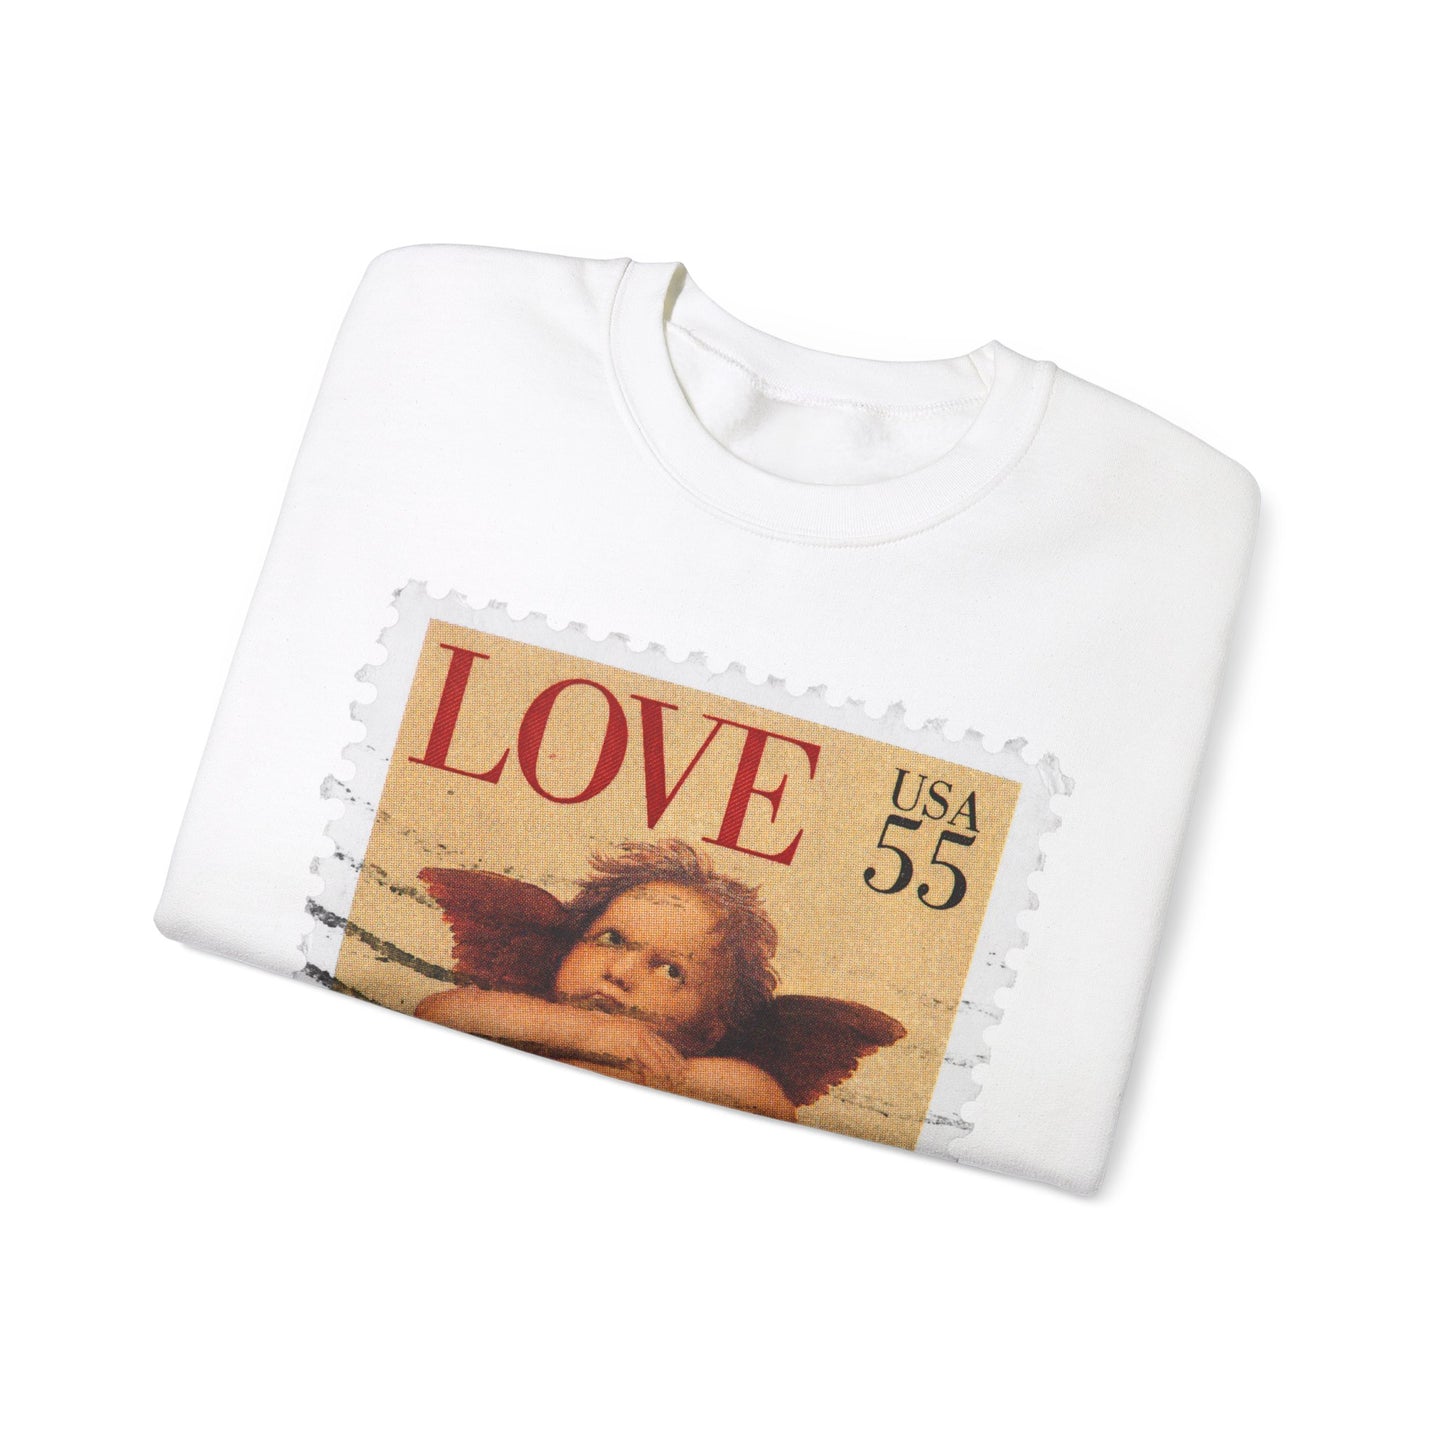 Vintage Love Stamp Sweatshirt